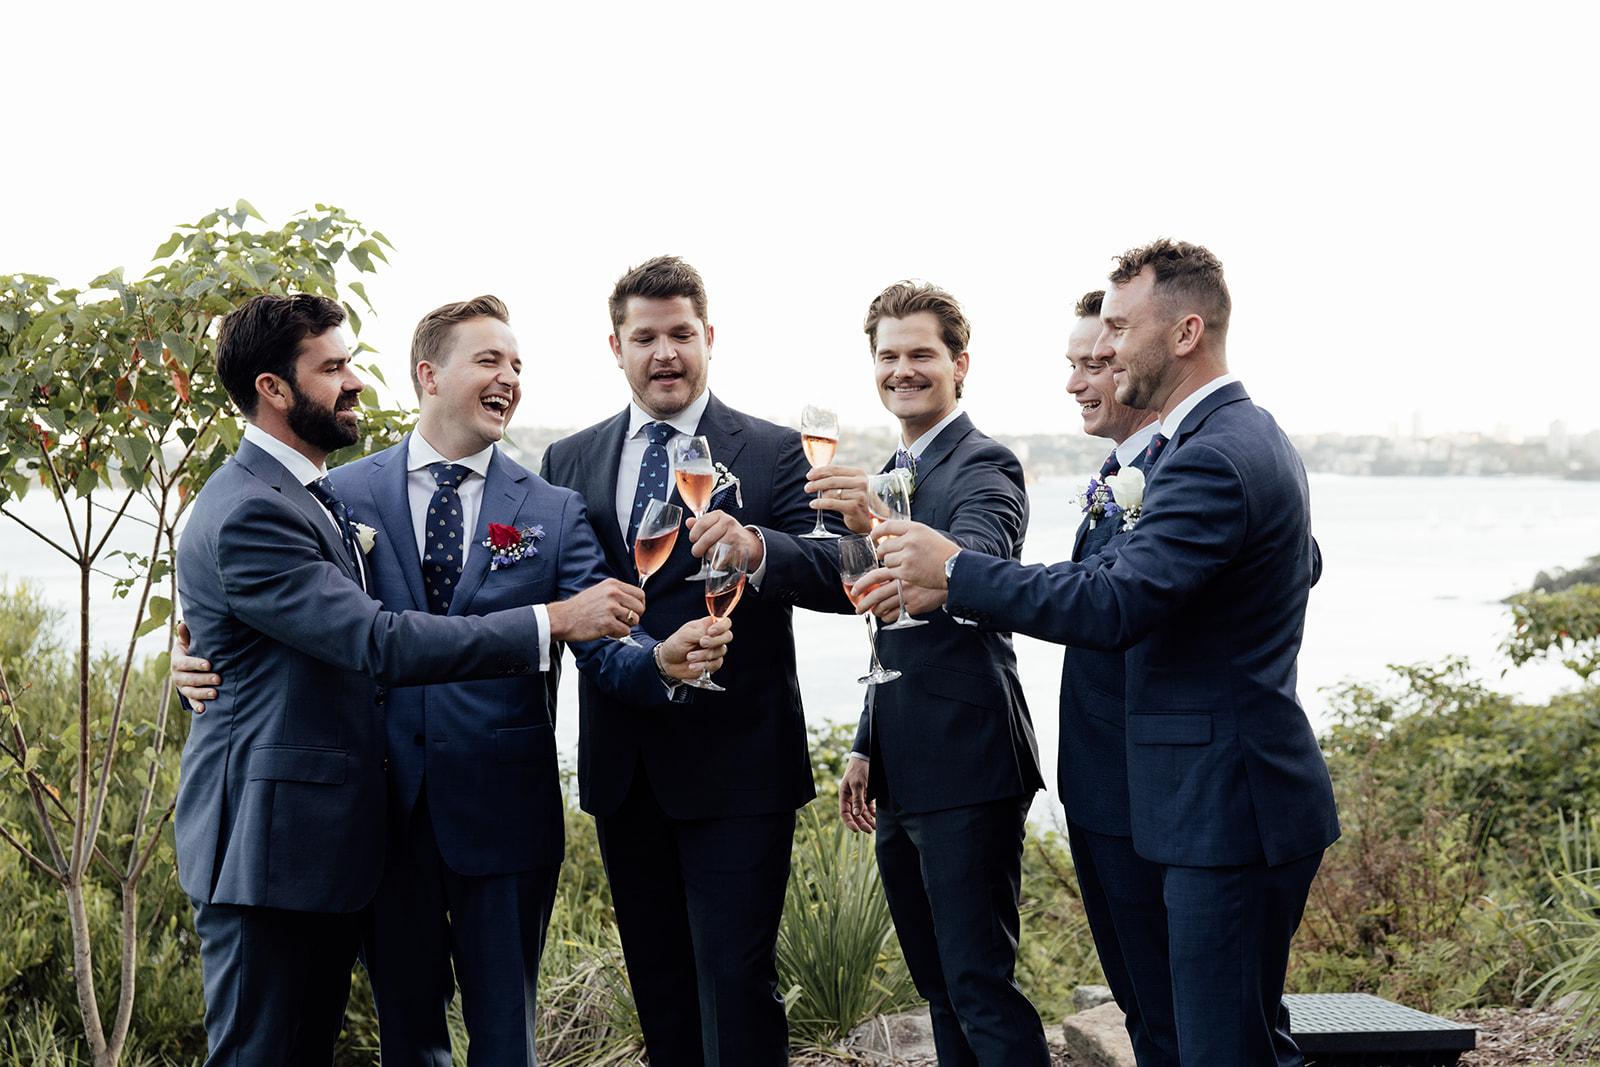 groom and groomsmen in suits celebrating